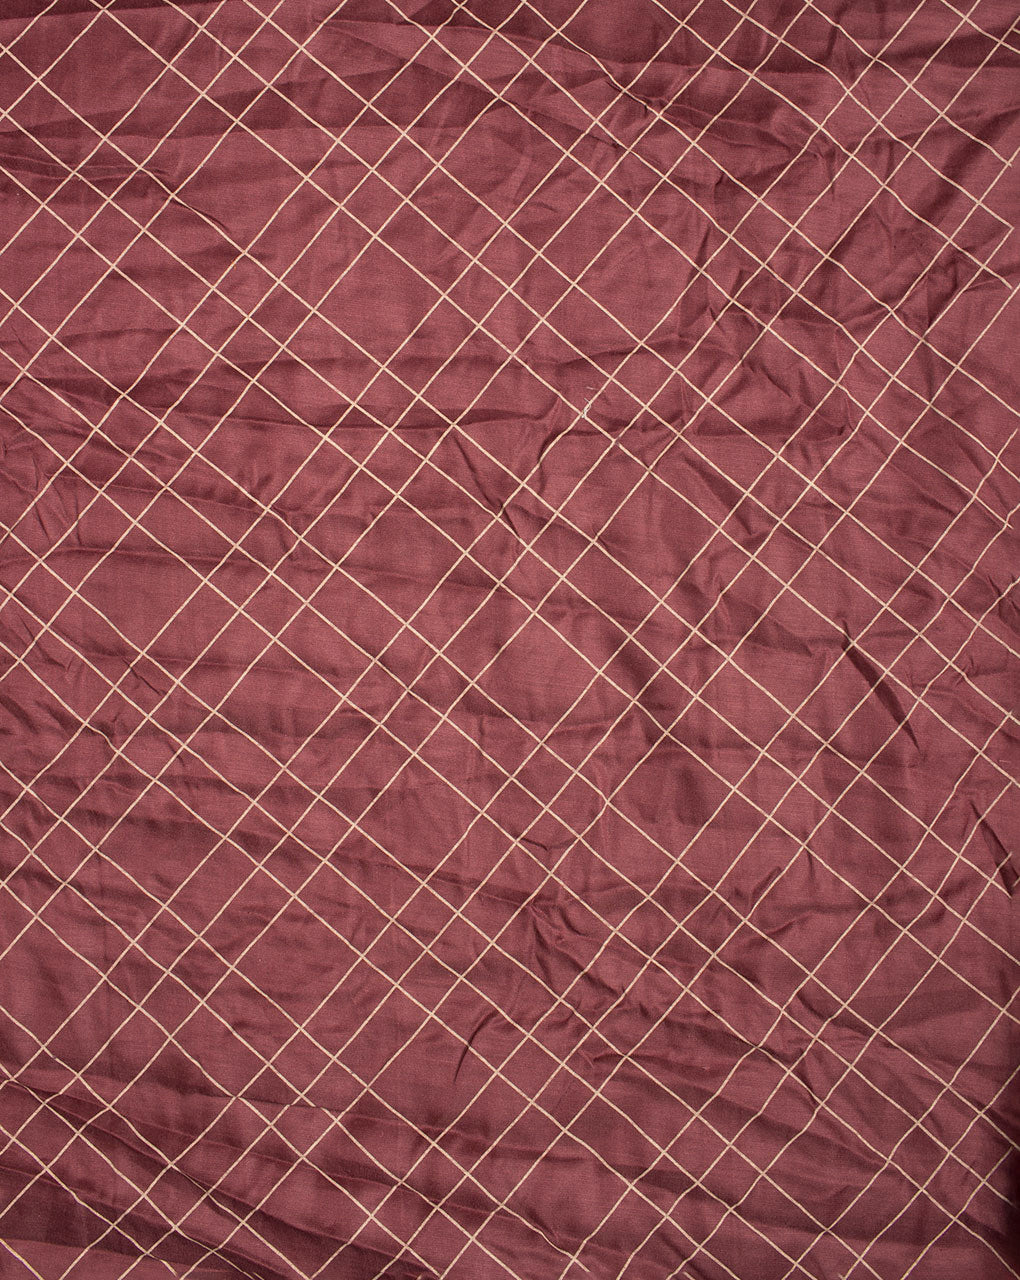 Khari Screen Print Polyester Fabric - Fabriclore.com